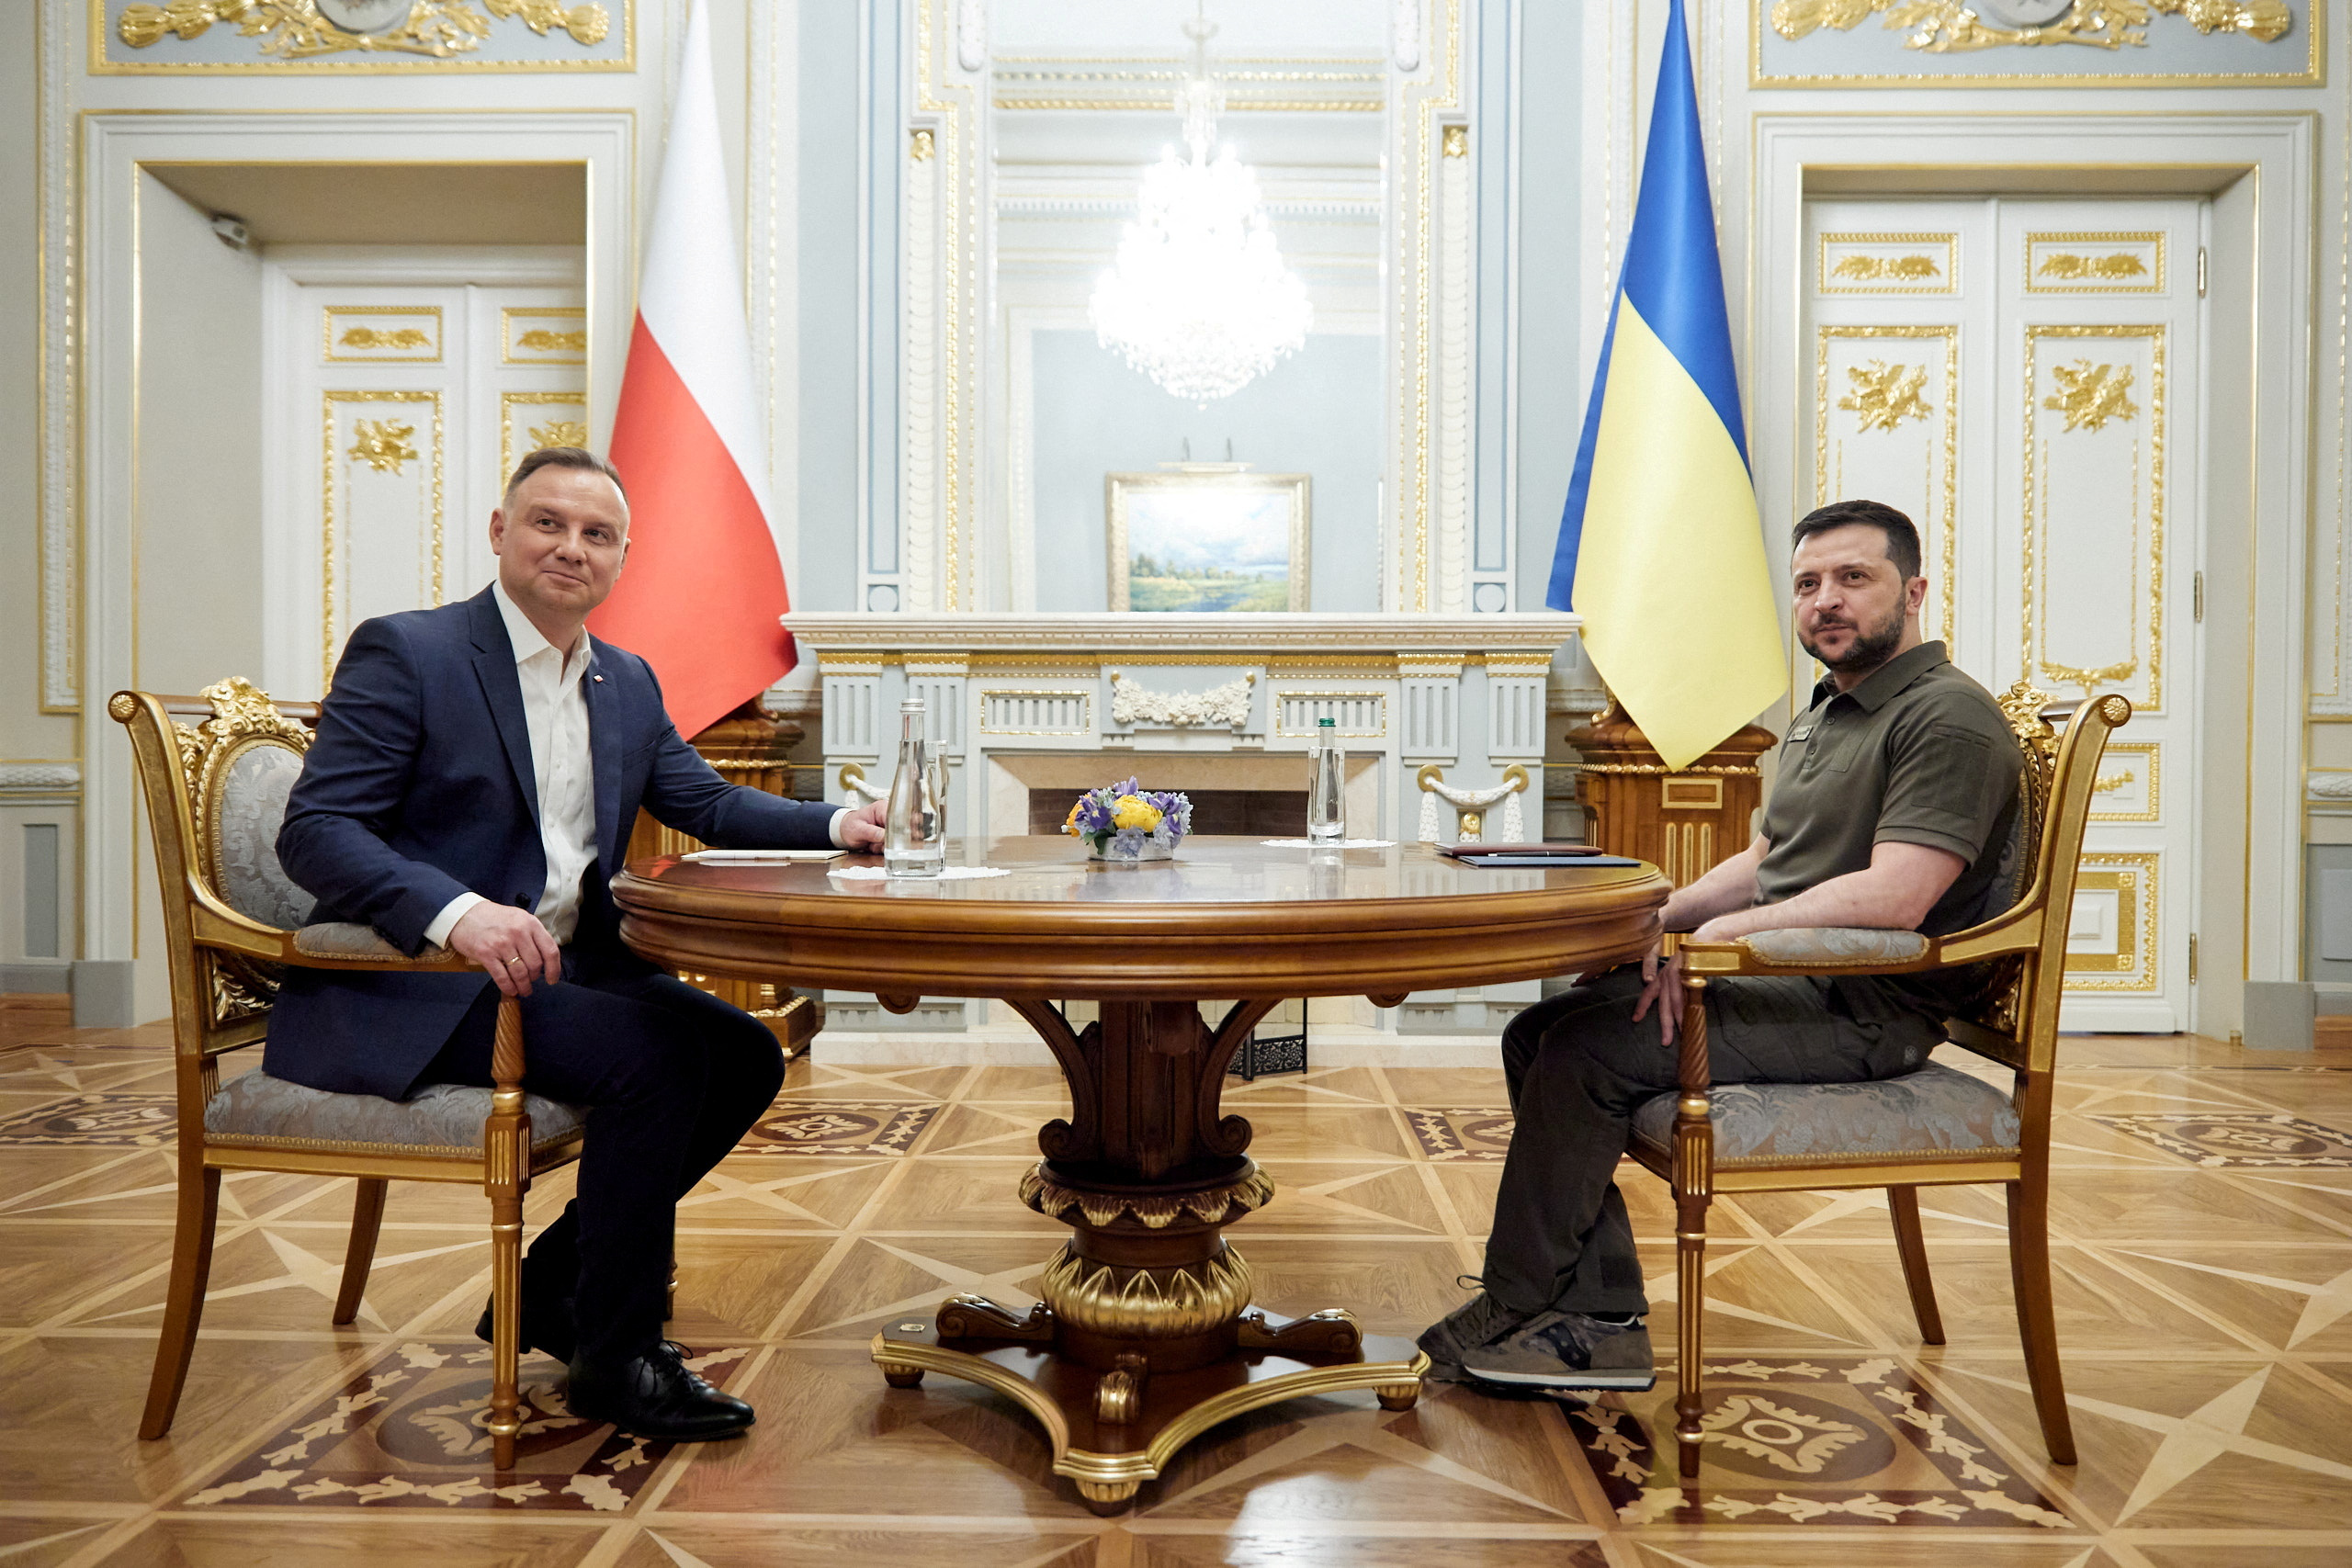 Poland's President Duda and Ukraine's President Zelenskiy attend a meeting in Kyiv